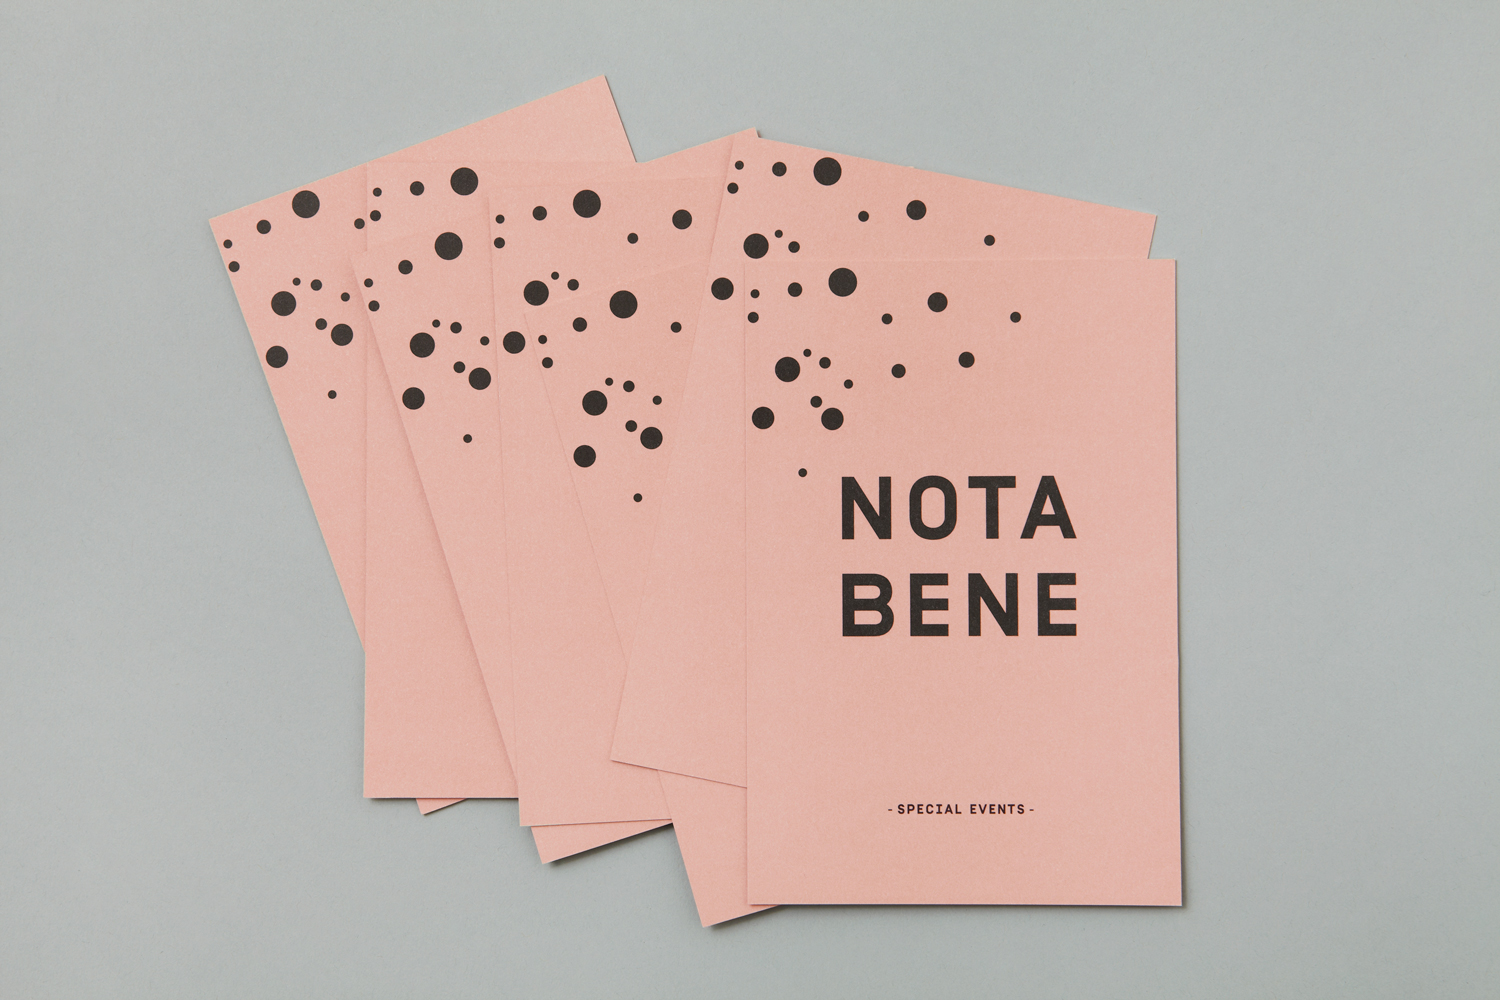 Brand identity and print for Toronto restaurant Nota Bene by graphic design studio Blok, Canada